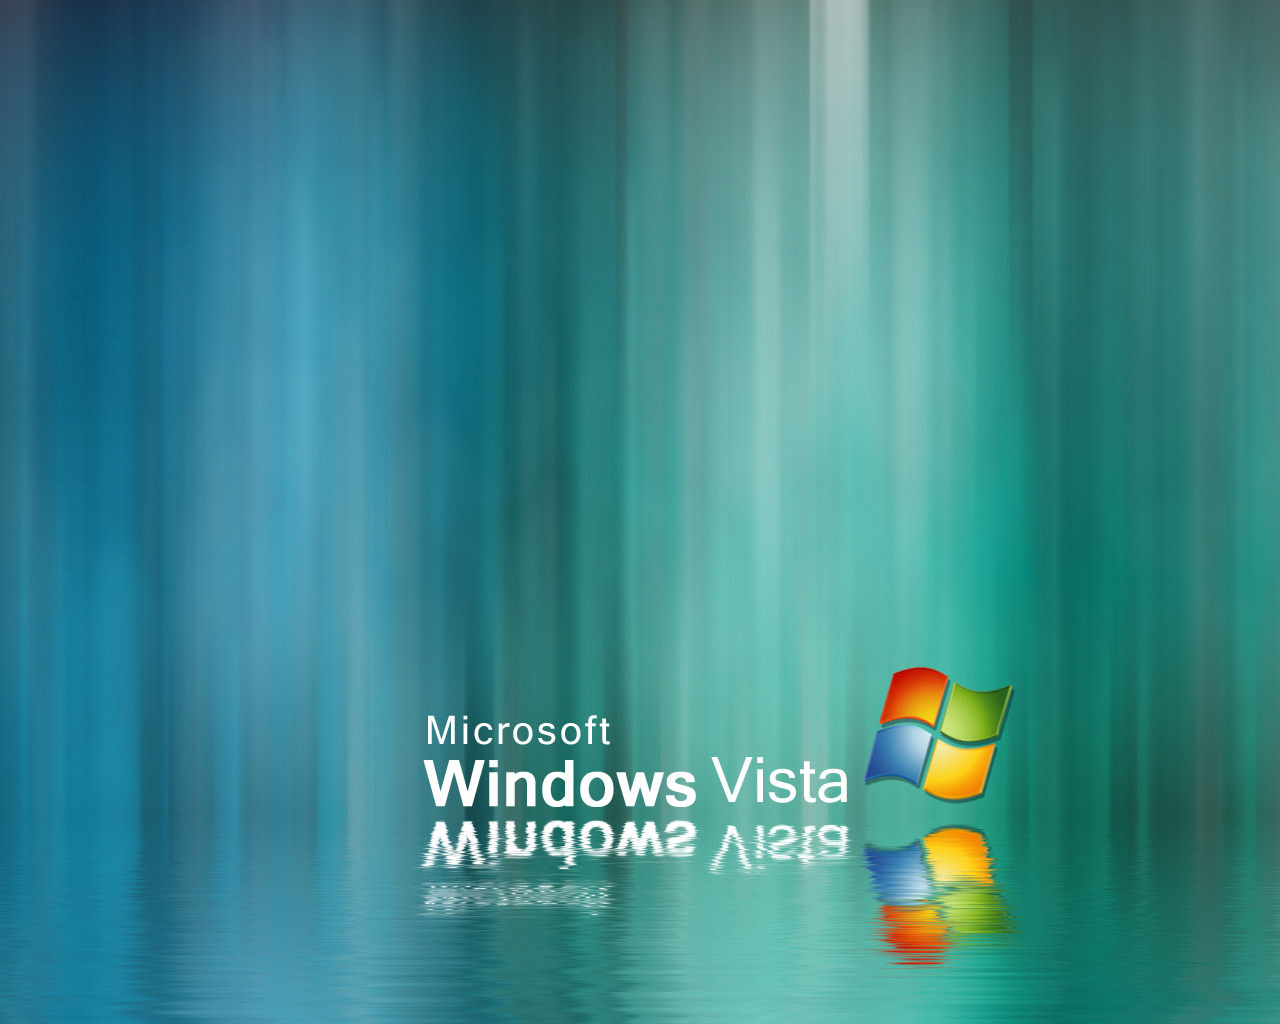 Windows Vista Water Reflection Wallpaper Geekpedia